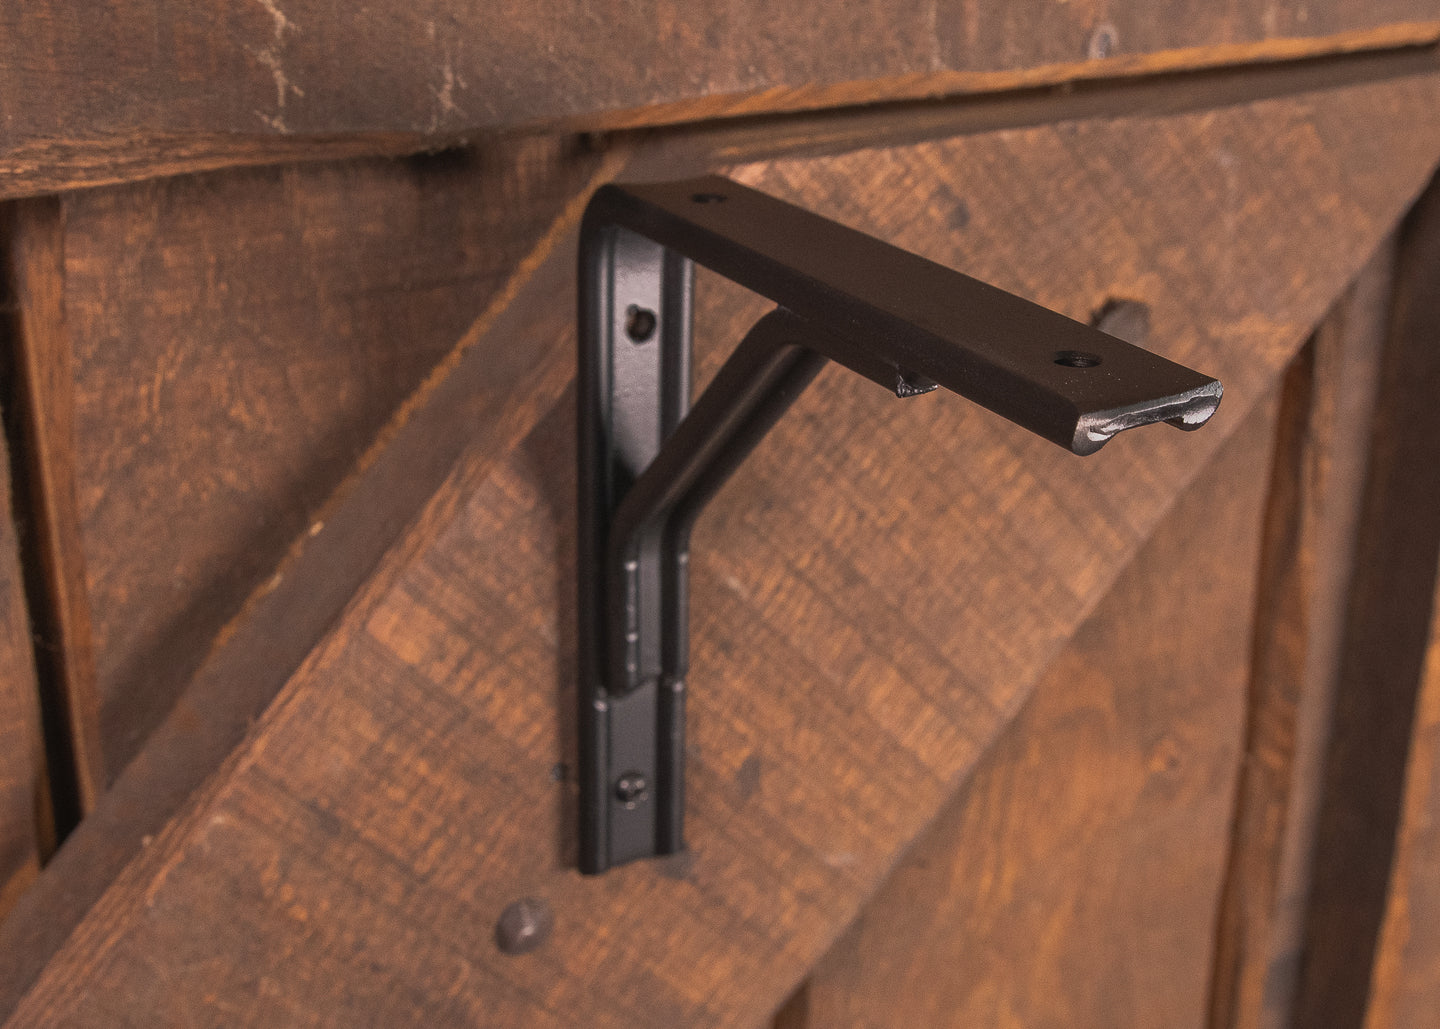 black Industrial style wrought iron bracket for handrails & shelfs